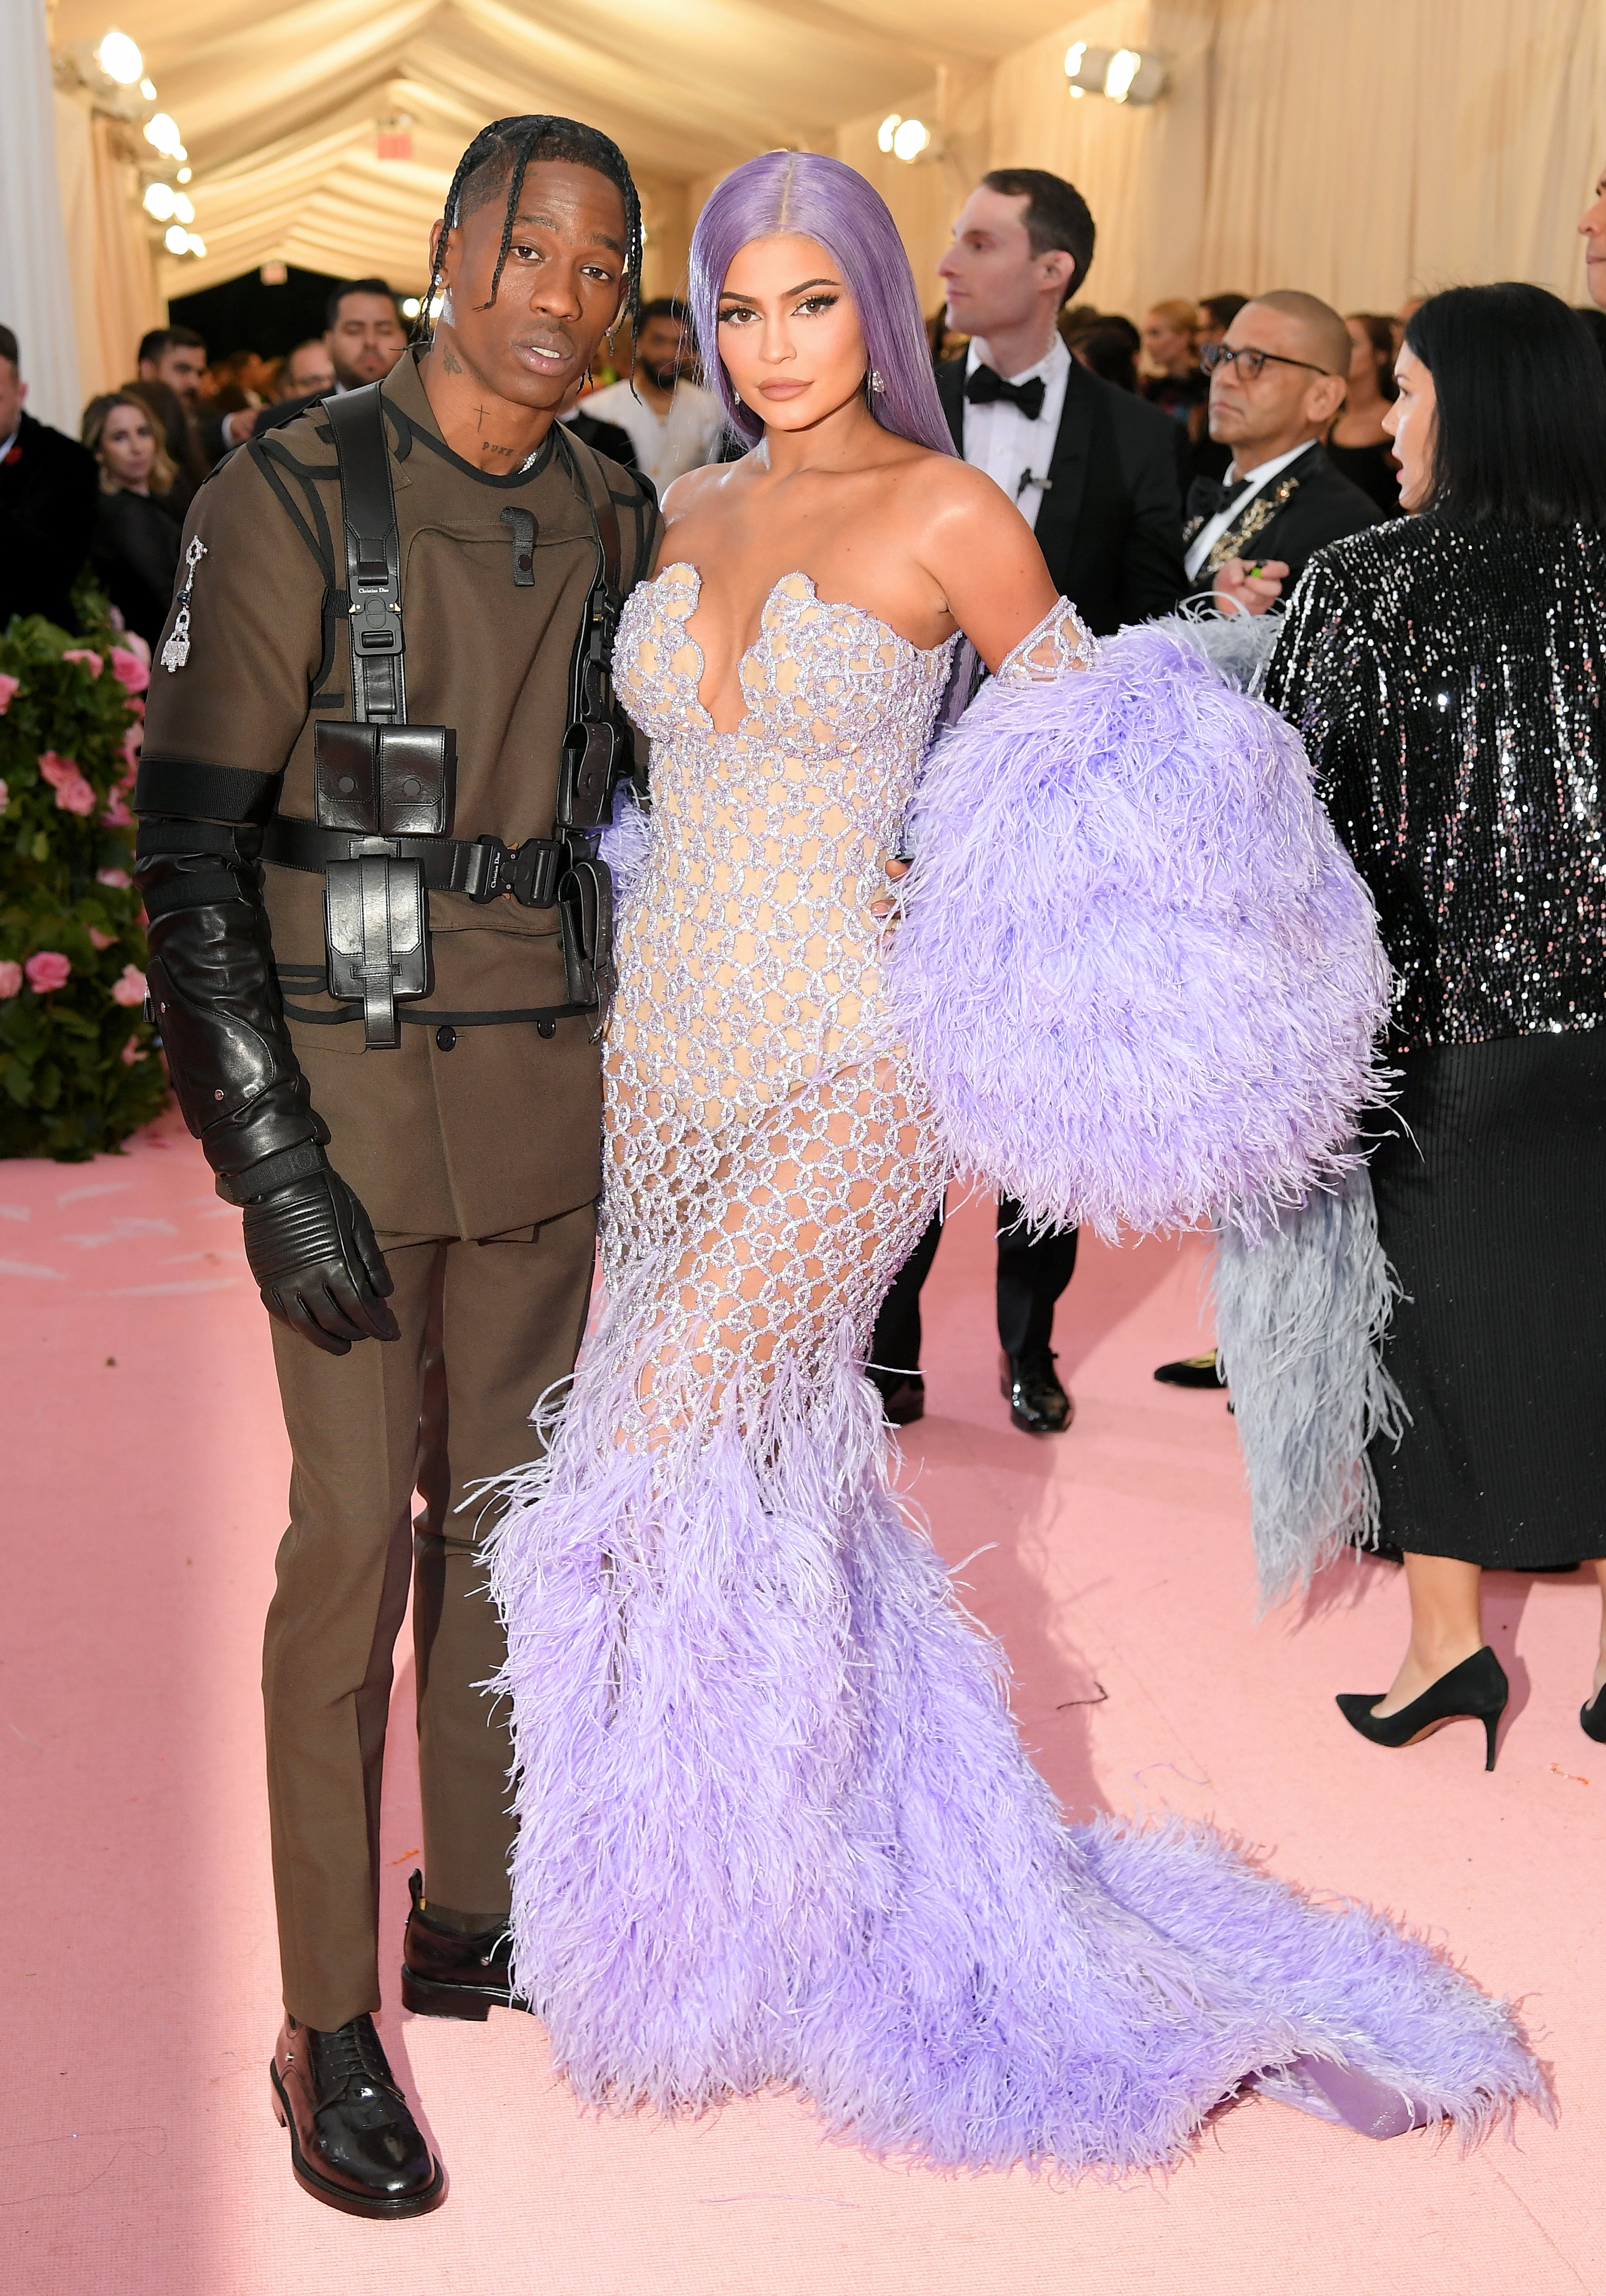 Kylie Jenner, Versace Dress, Lavender Dress, Strapless, Very Low